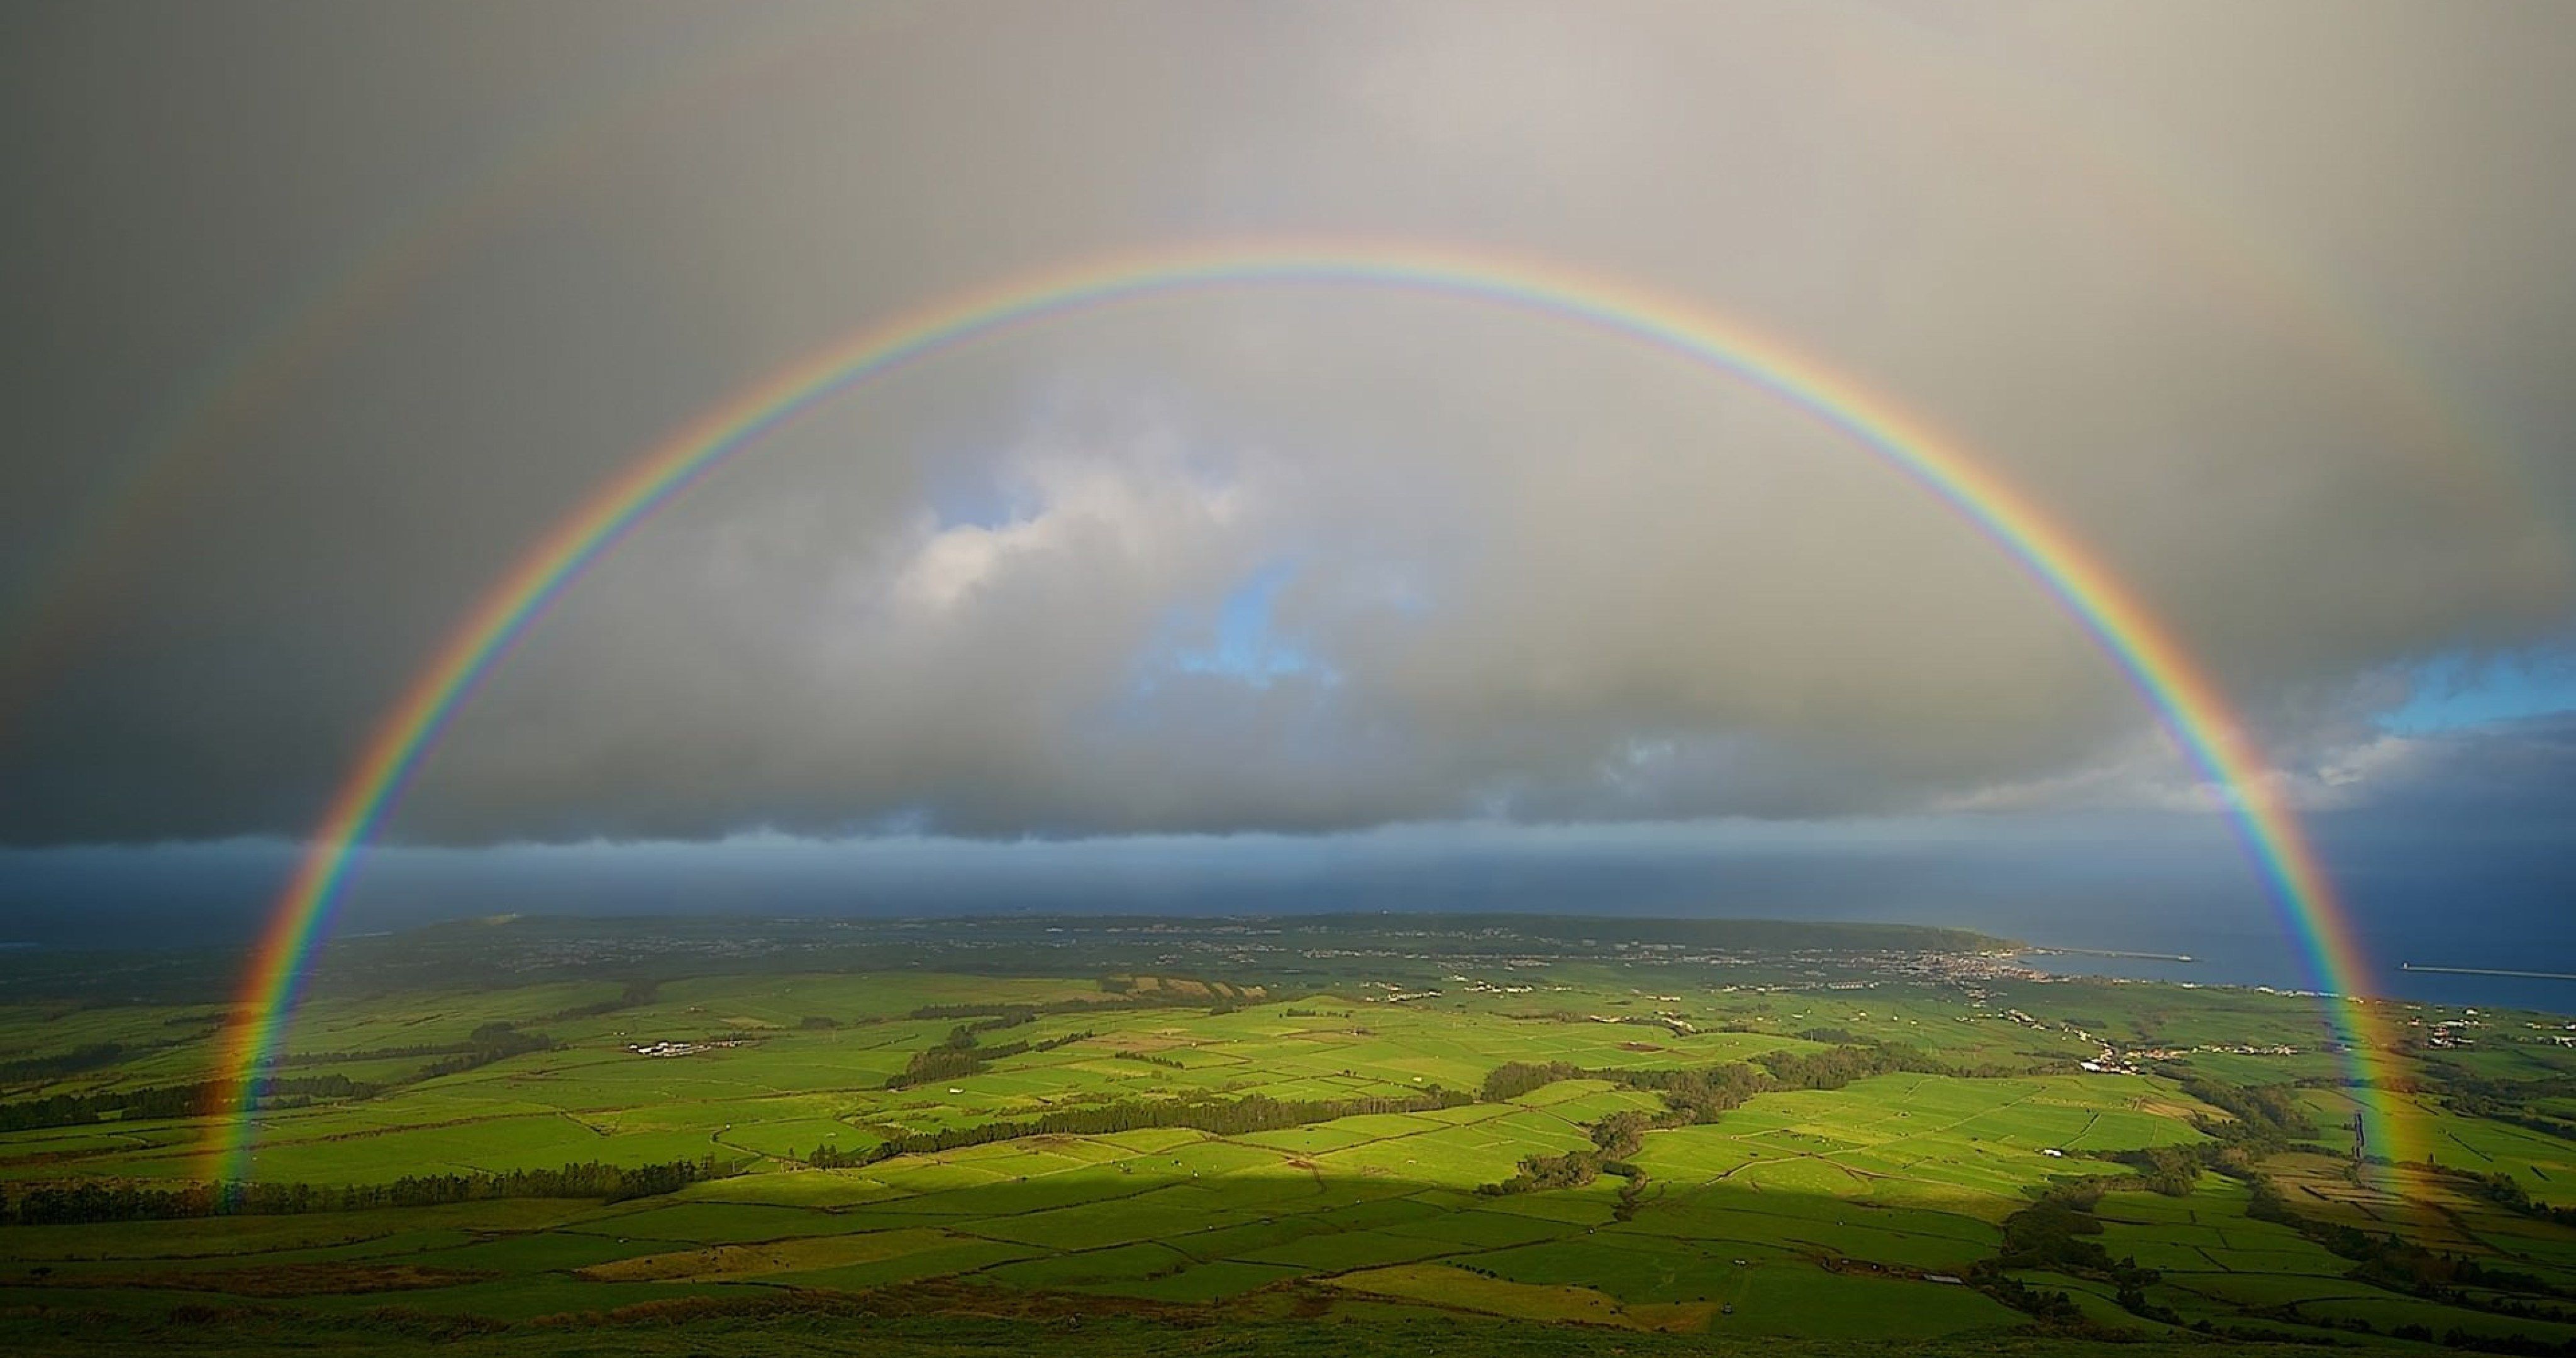 rainbow in clouds 4k ultra HD wallpaper. Sky image, Rainbow cloud, Rainbow photo